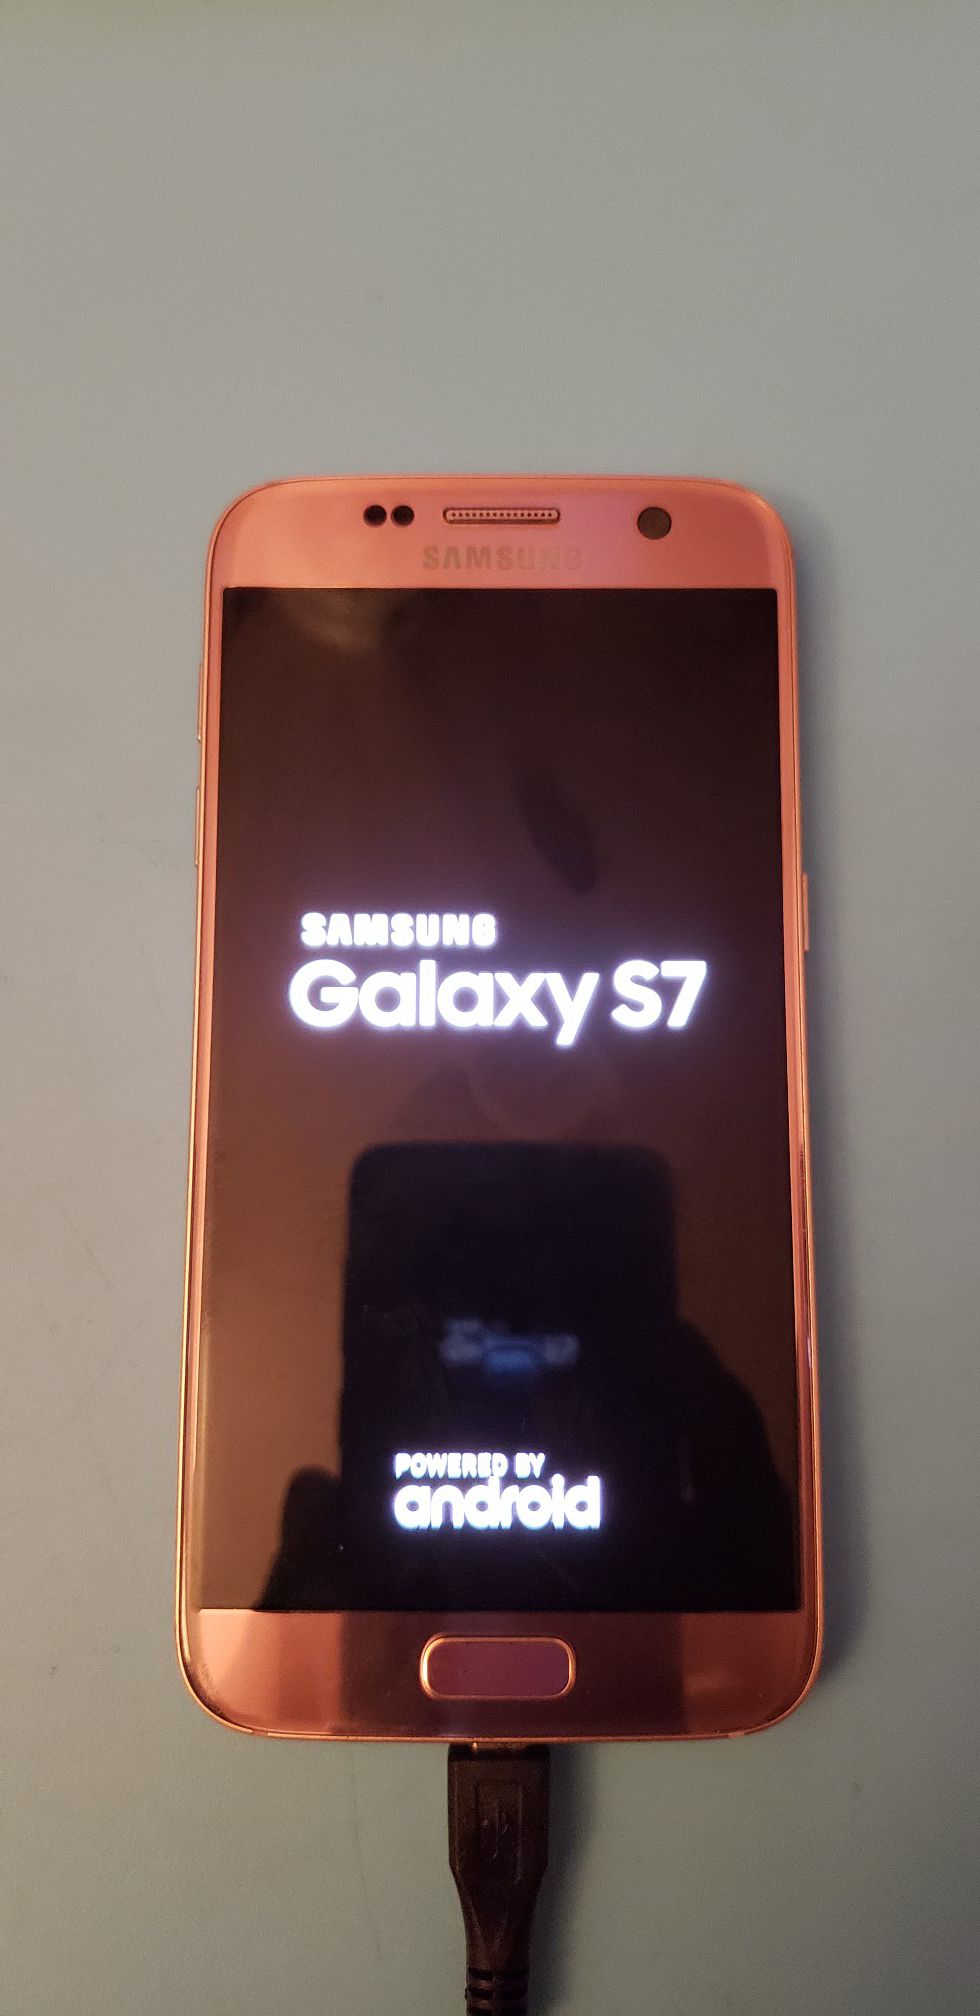 Samsung 7S for sprint